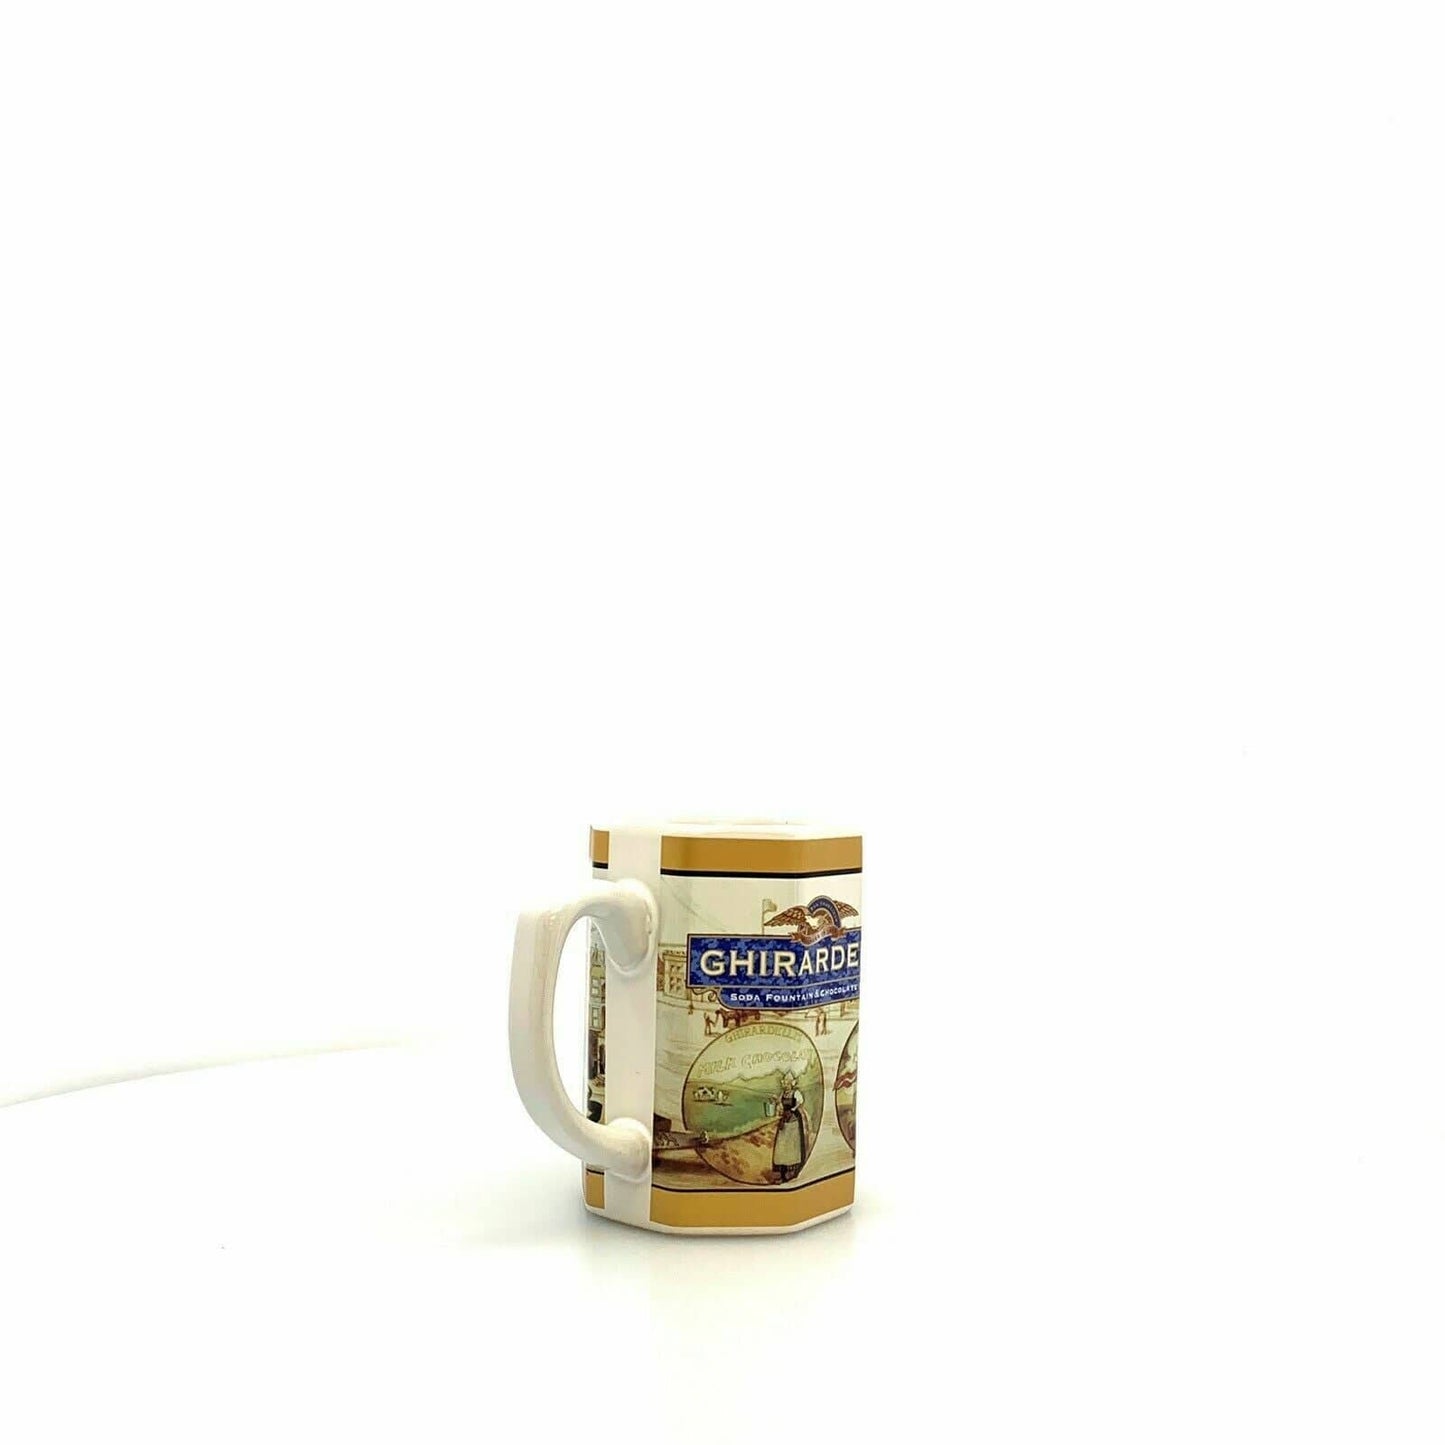 GHIRARDELLI Chocolate Company Collectible Ceramic Octagonal Coffee Mug Cup